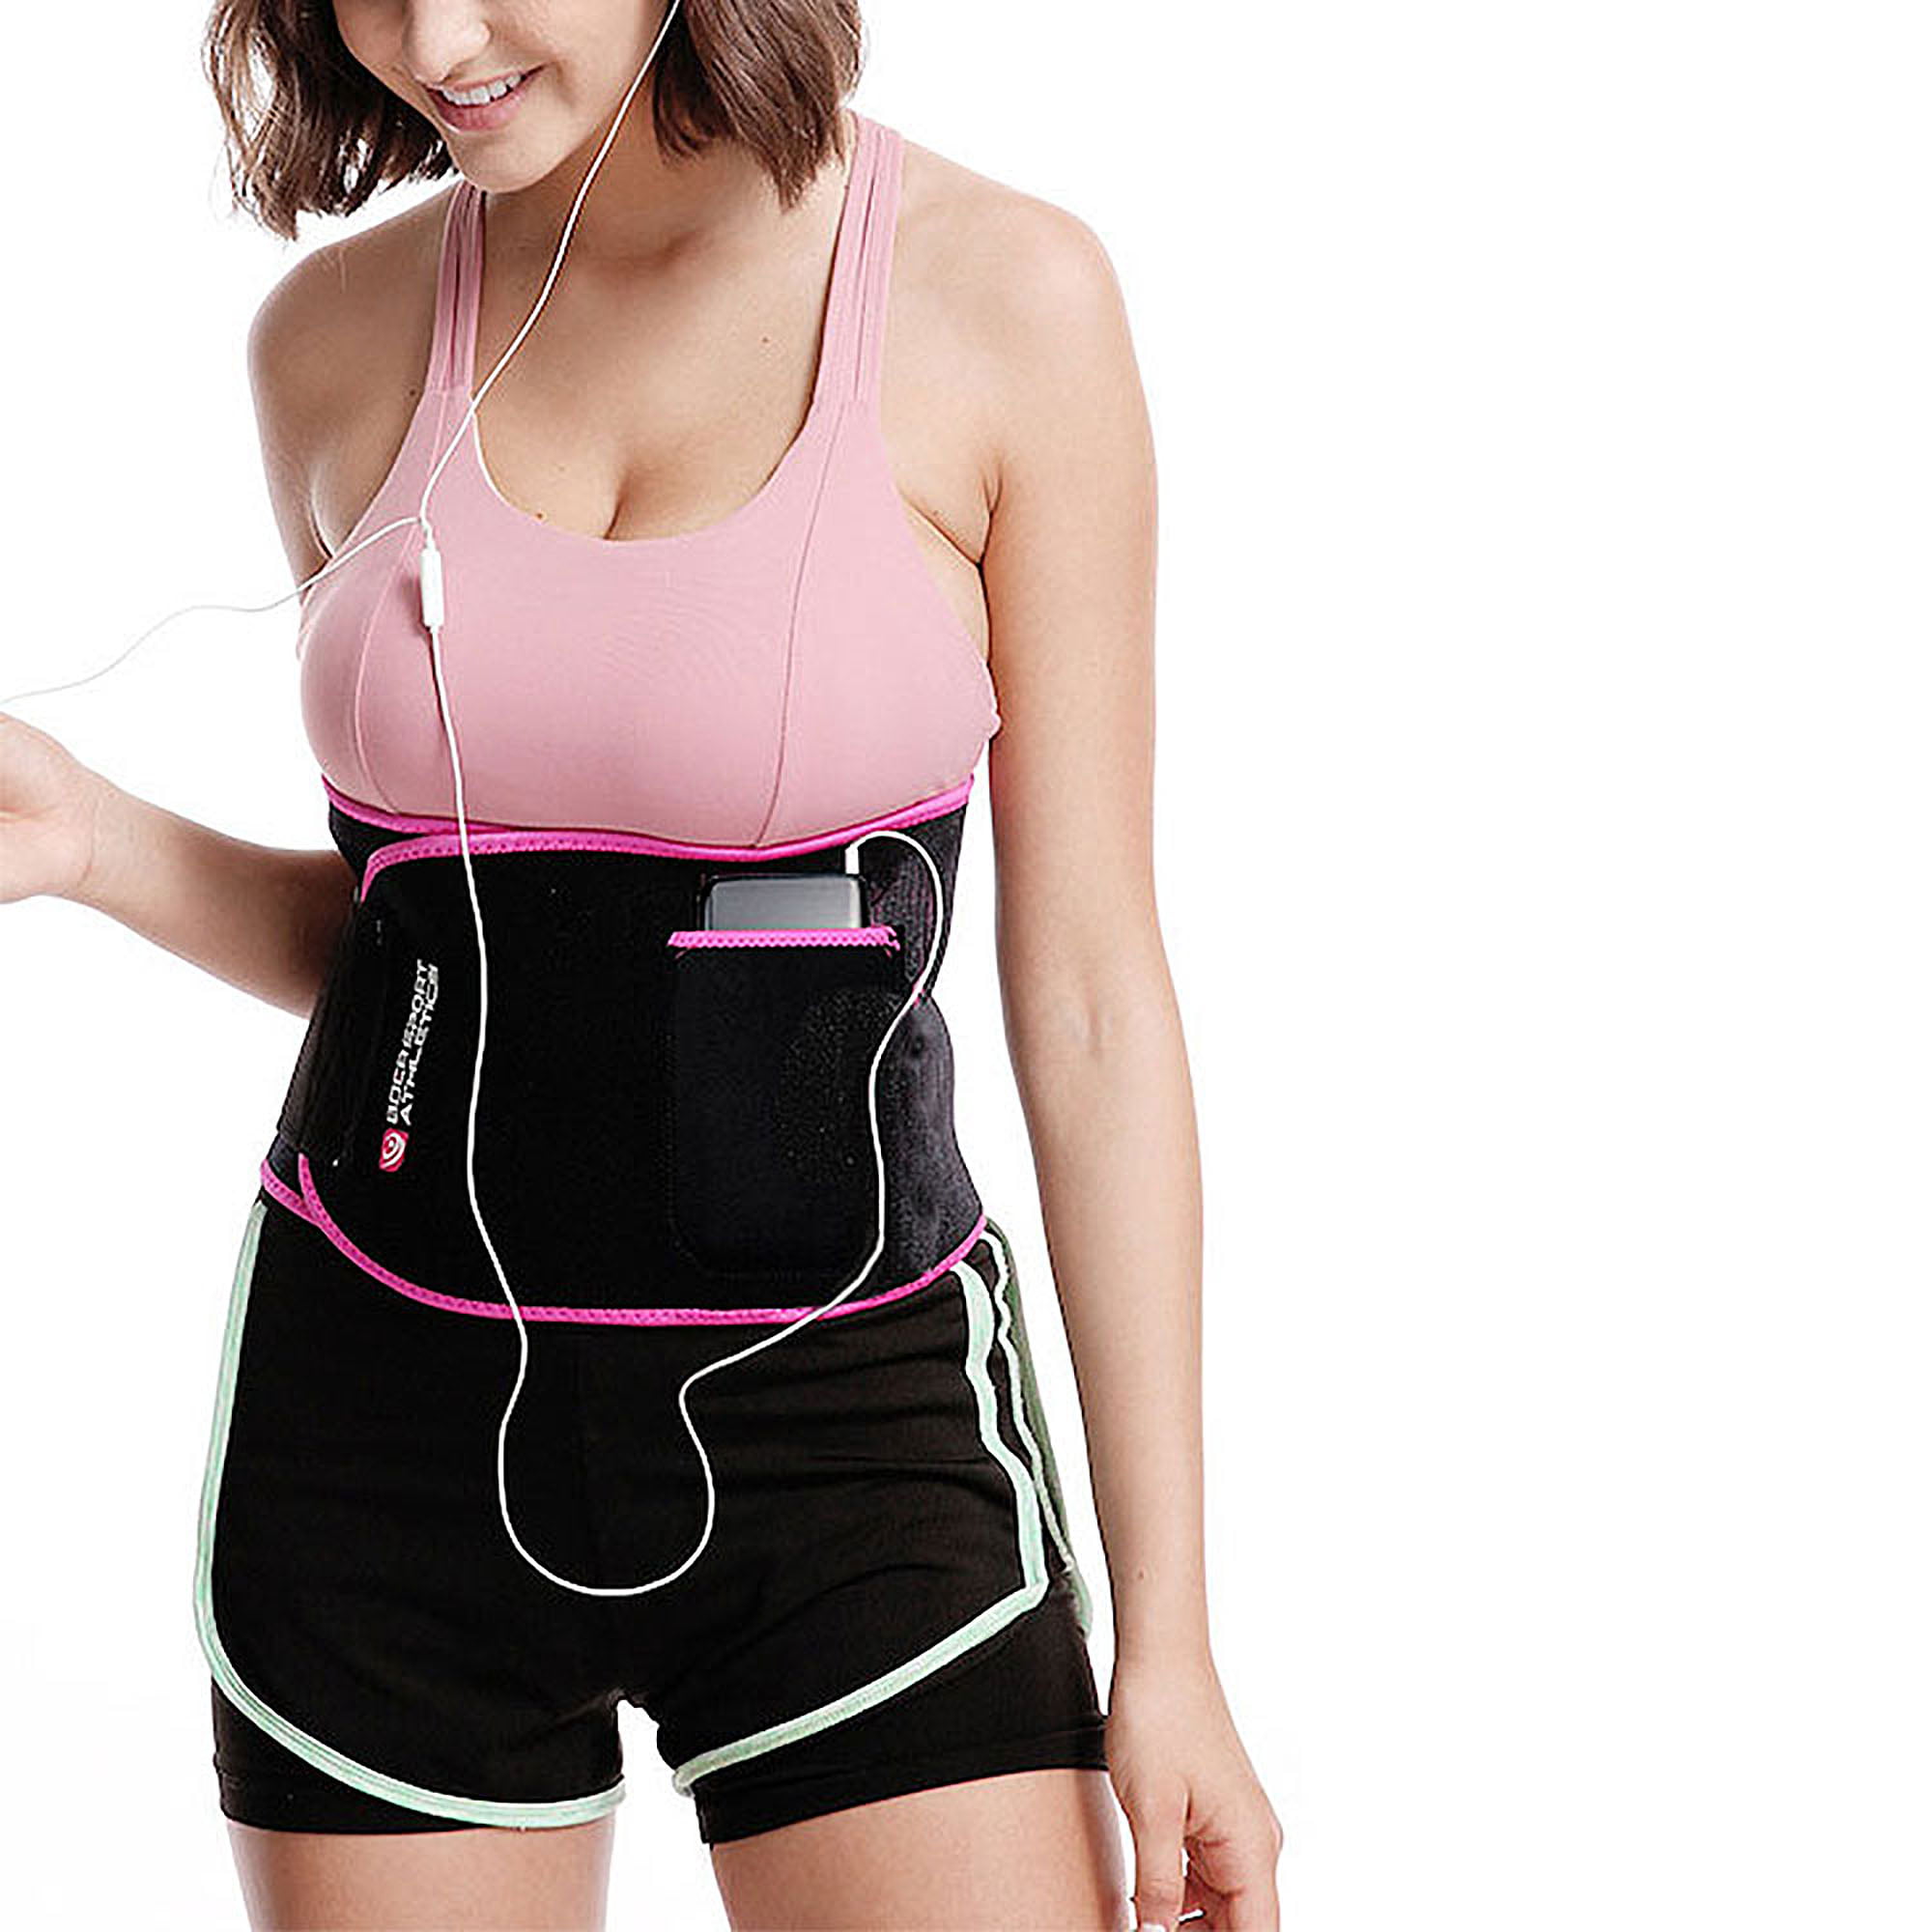 Details about   Women Waist Trainer Body Shaper Slimmer Sweat Gym Belt Adjustable Support Girdle